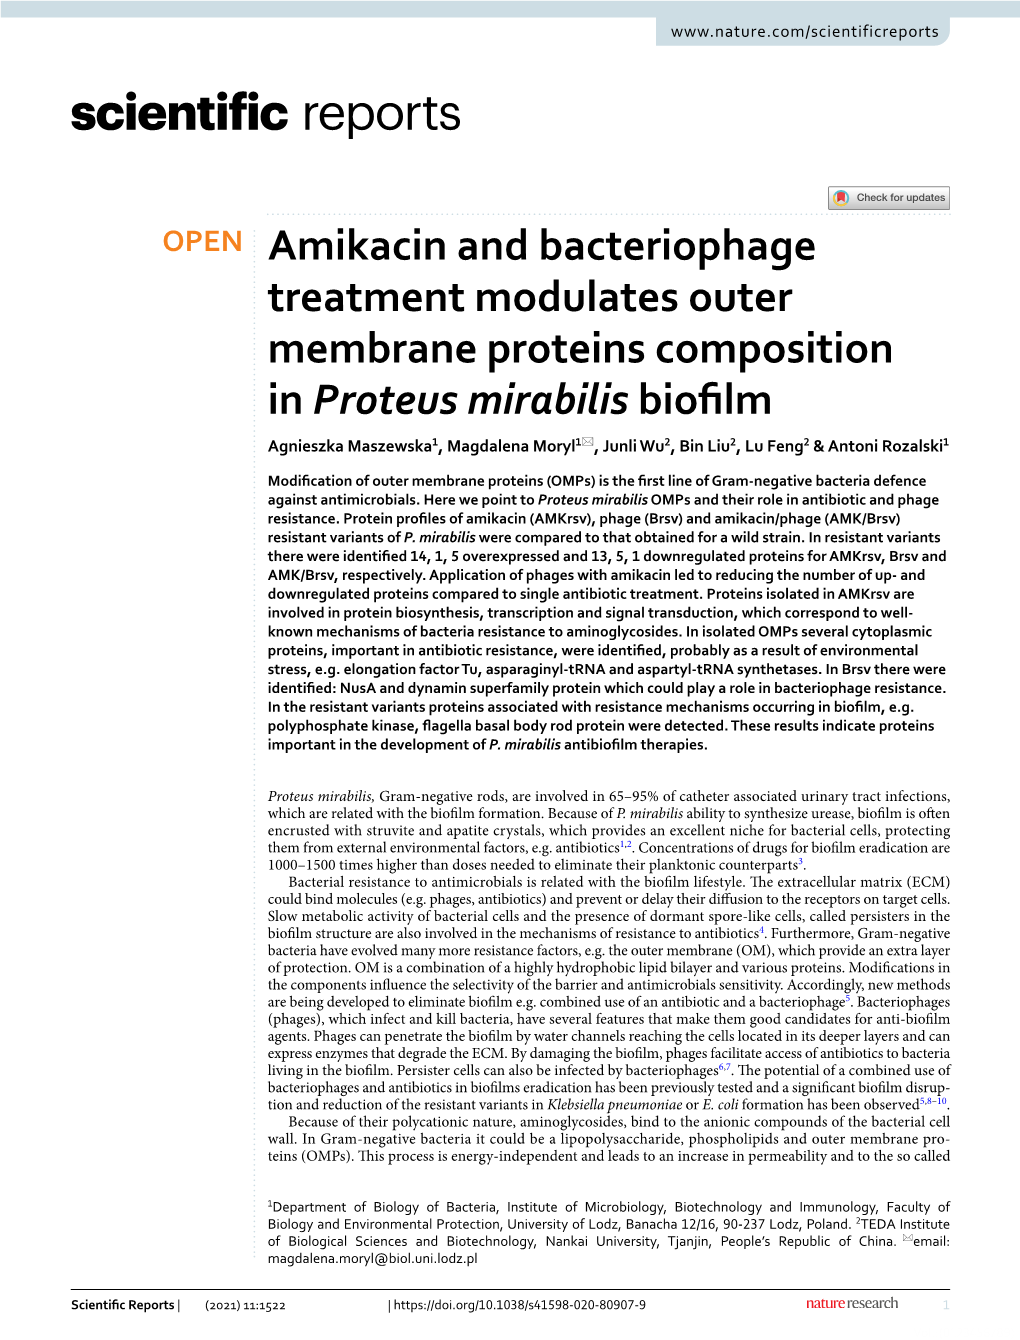 Amikacin and Bacteriophage Treatment Modulates Outer